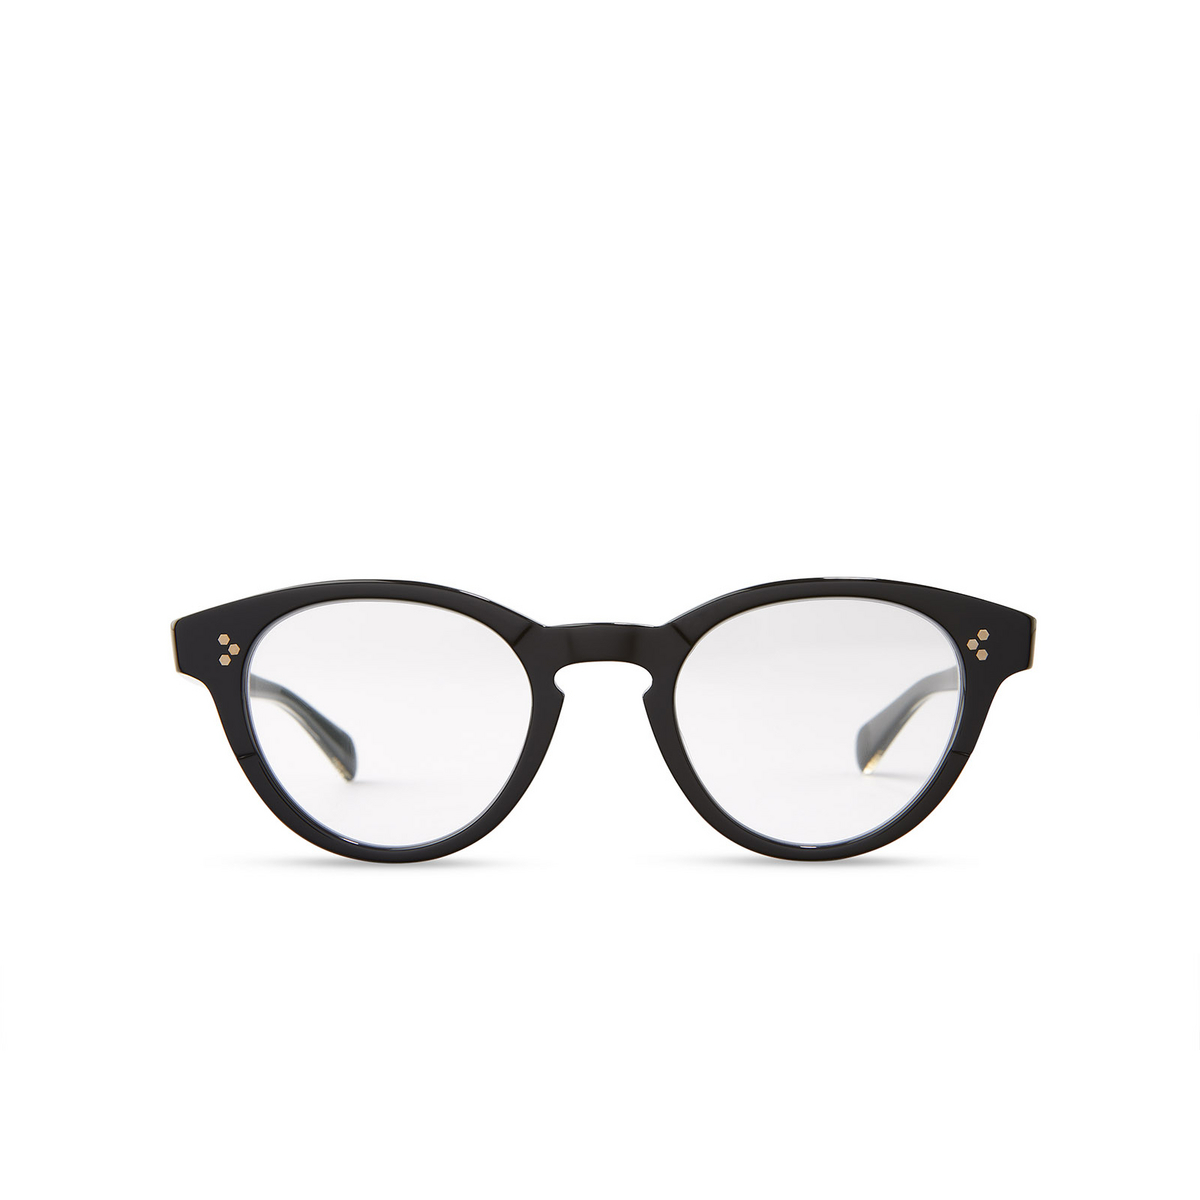 Mr. Leight AUDREY C Eyeglasses BK-12KG Black-12K White Gold - front view